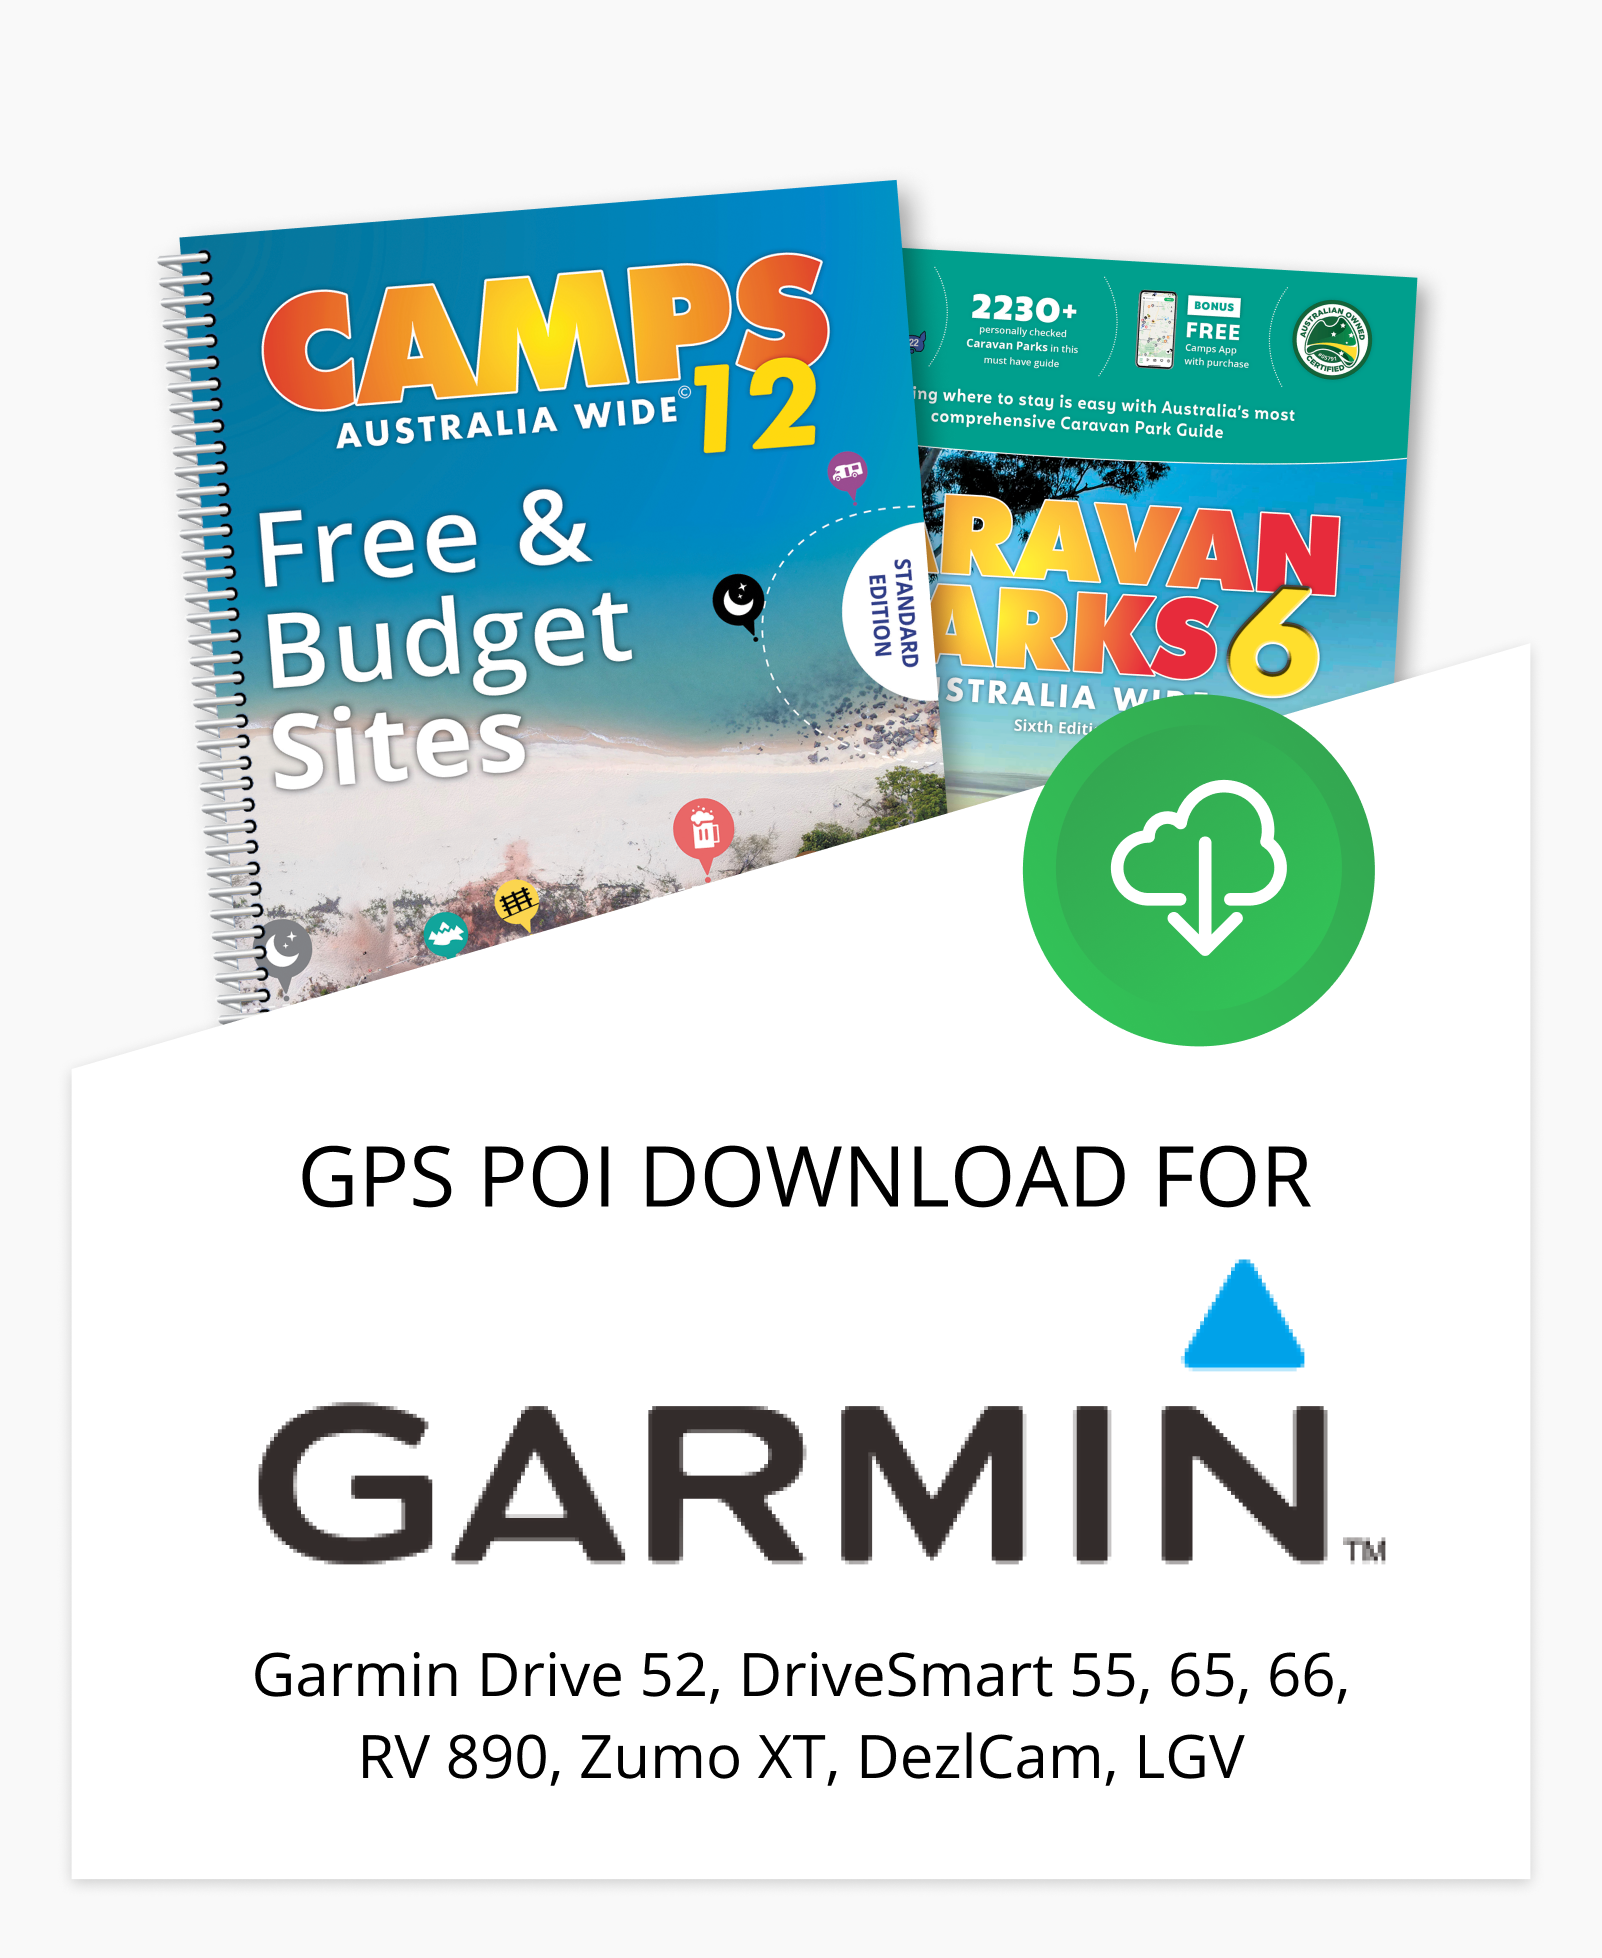 CAMPS Australia Wide Premium POIs for Garmin Drive 52, DriveSmart 55, 65, 66, RV 890, Zumo XT, DezlCam, LGV